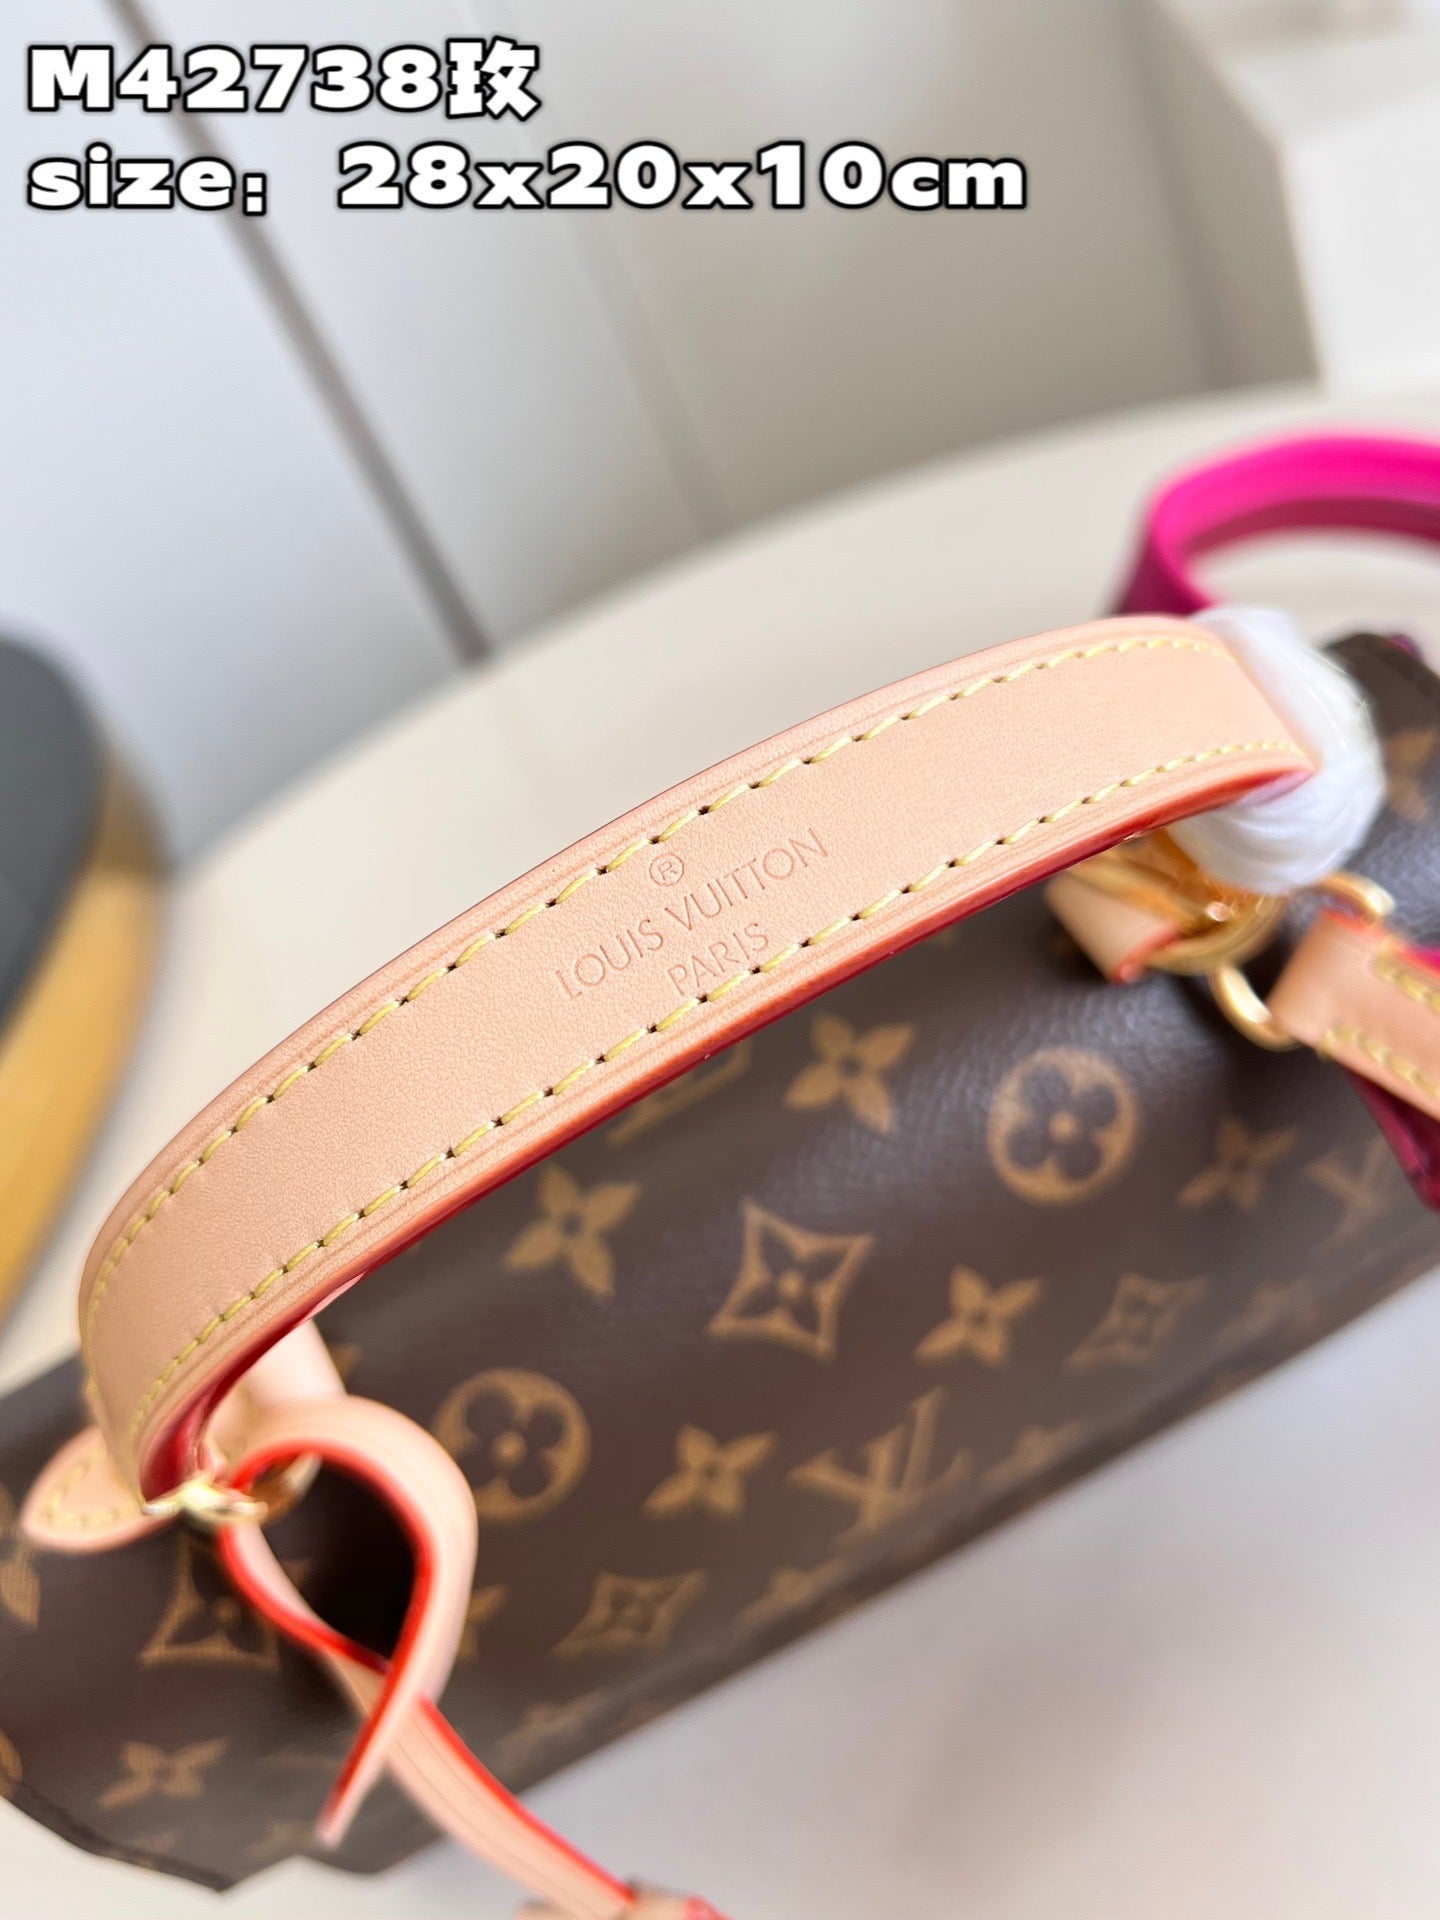 Monogram Cluny BB - Leather Handbag for Women